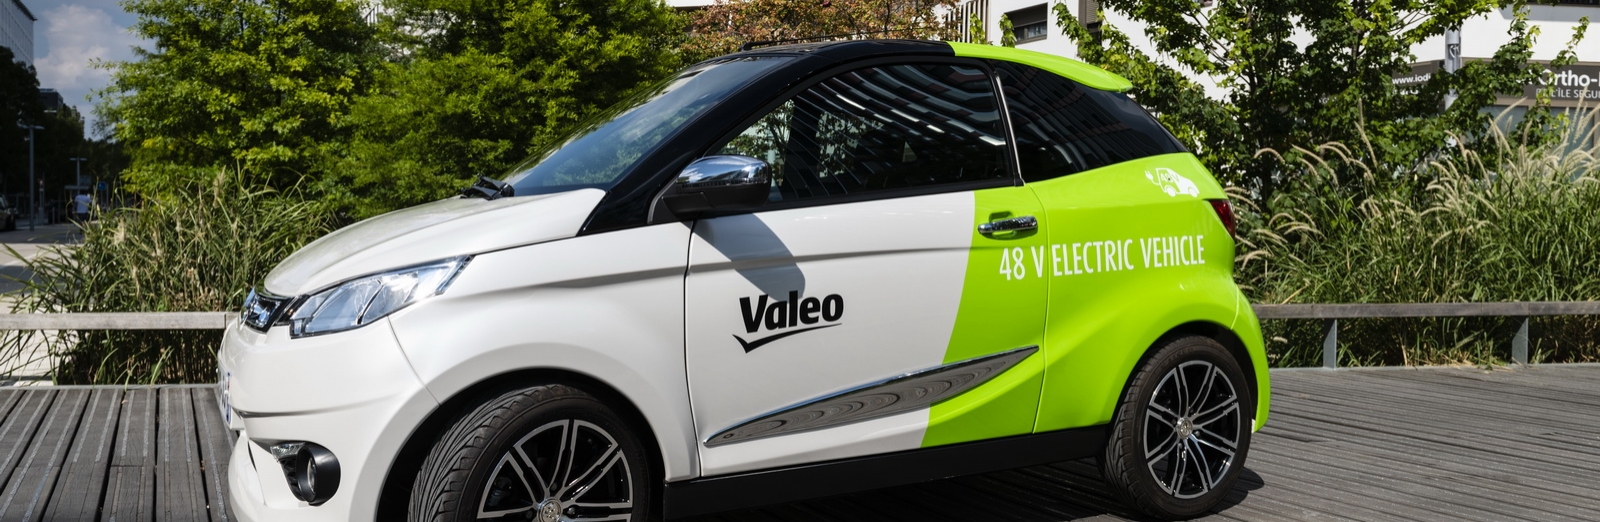 Valeo | smart technology for smarter mobility